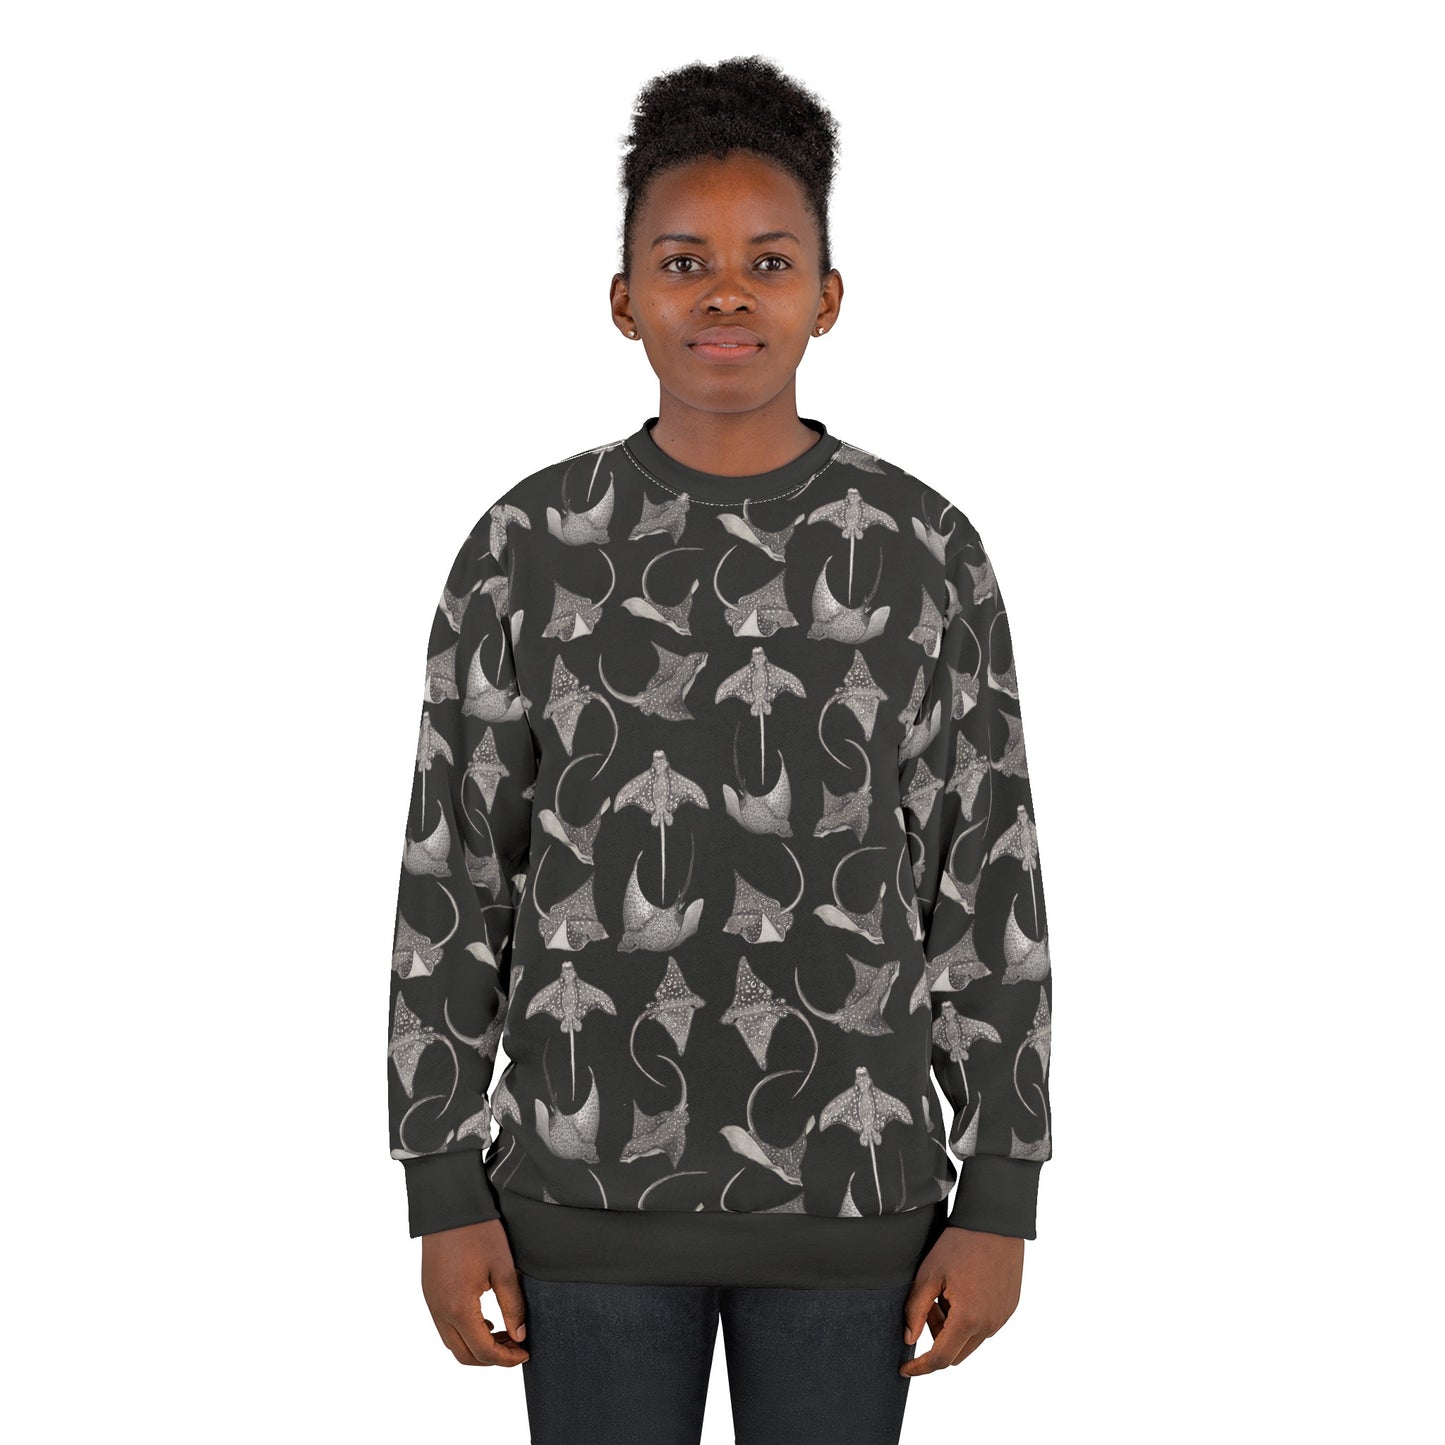 Eagle Ray - Unisex Sweatshirt Limited Edition - Black